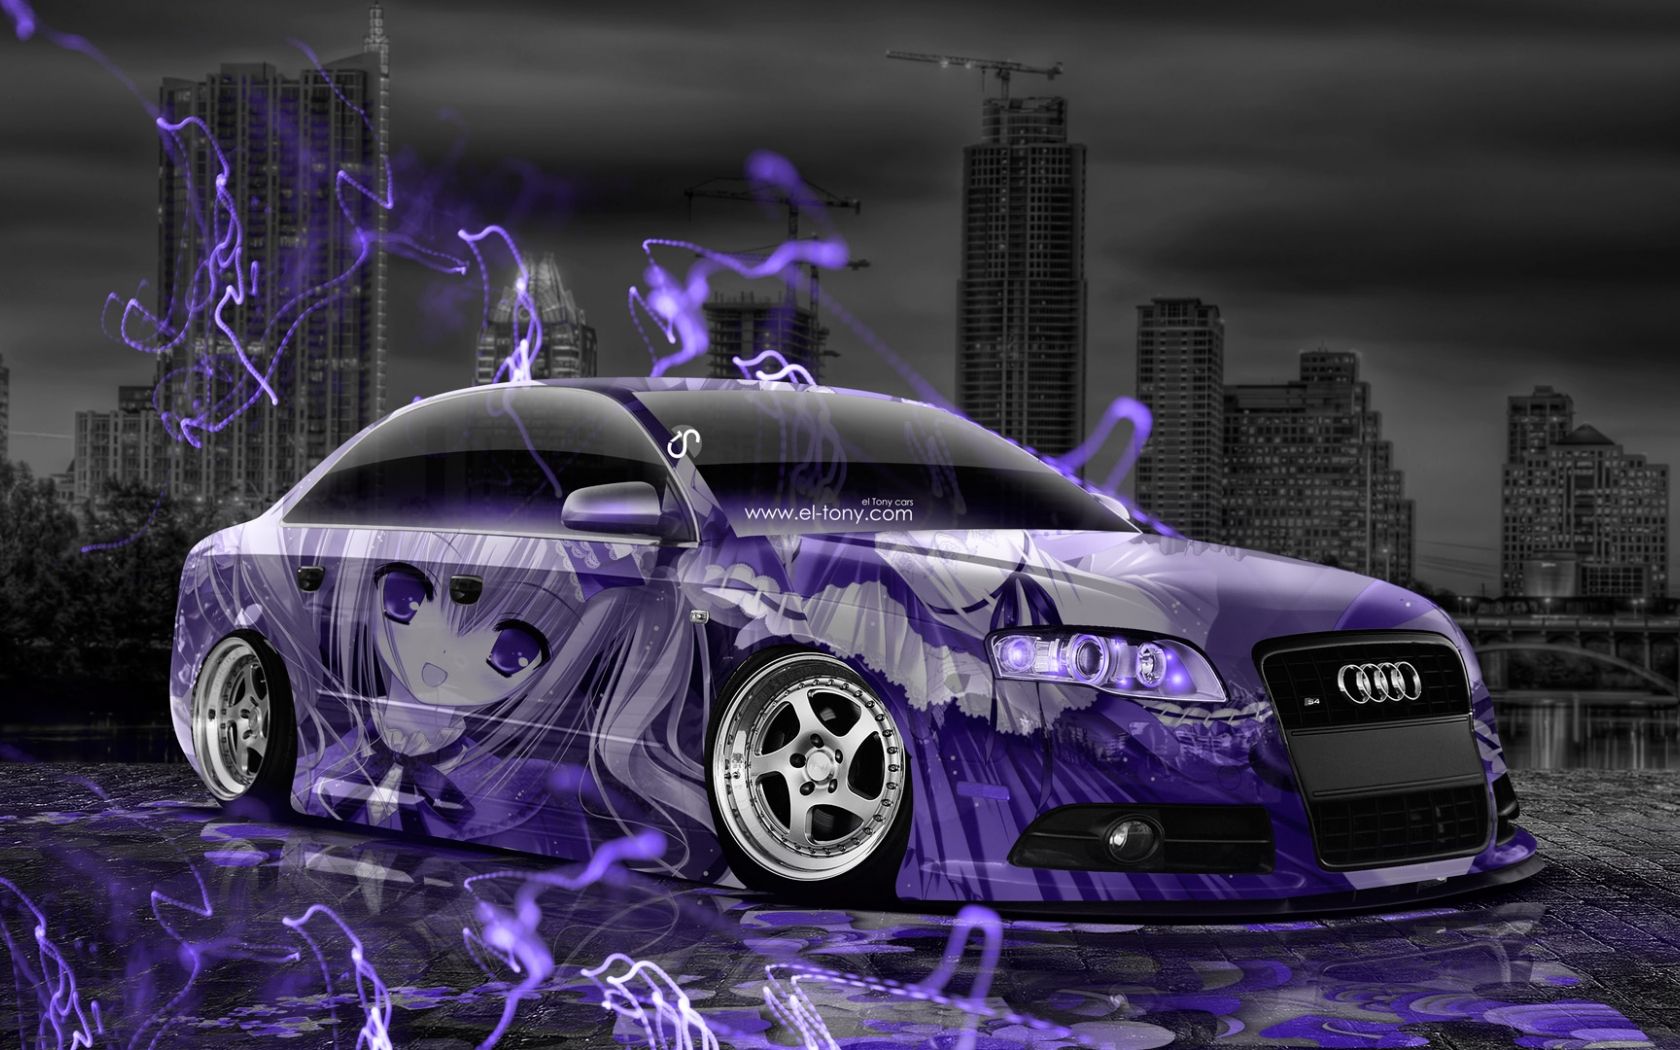 Free download Anime Girl Aerography City Car 2015 Violet Neon